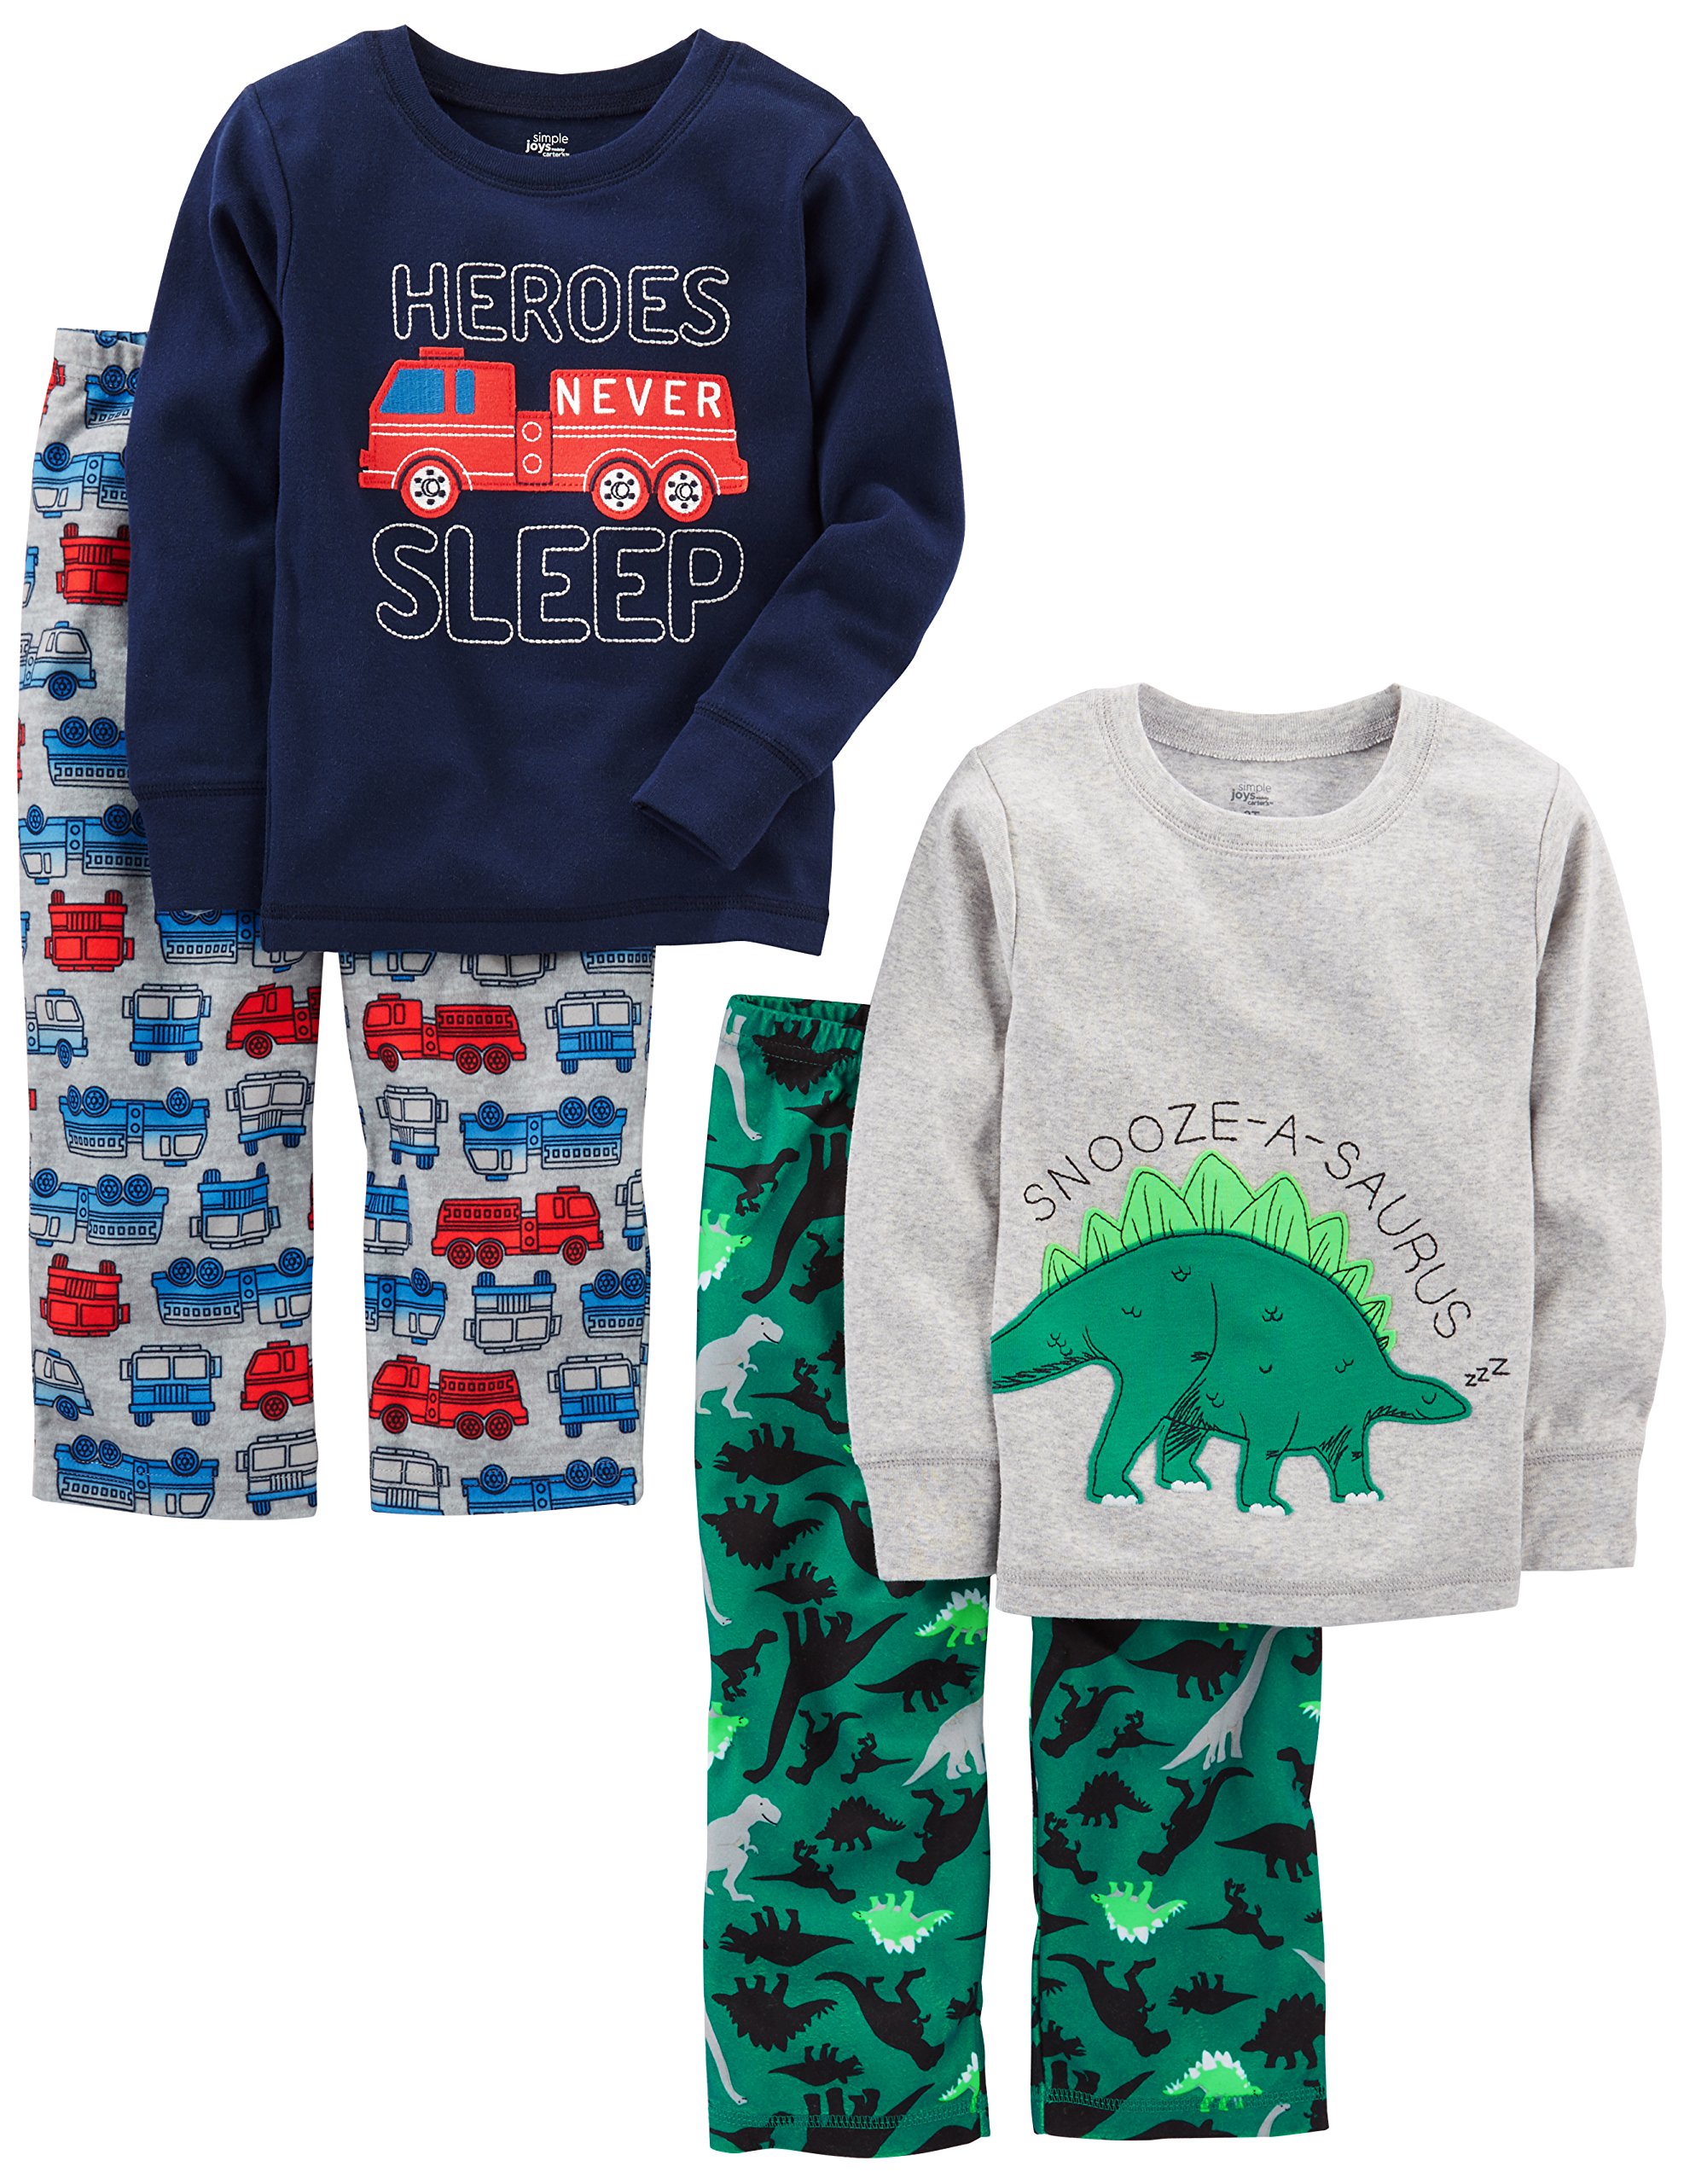 Simple Joys by Carter's Boys and Toddlers' 4-Piece Pajama Set (Cotton Top & Fleece Bottom)